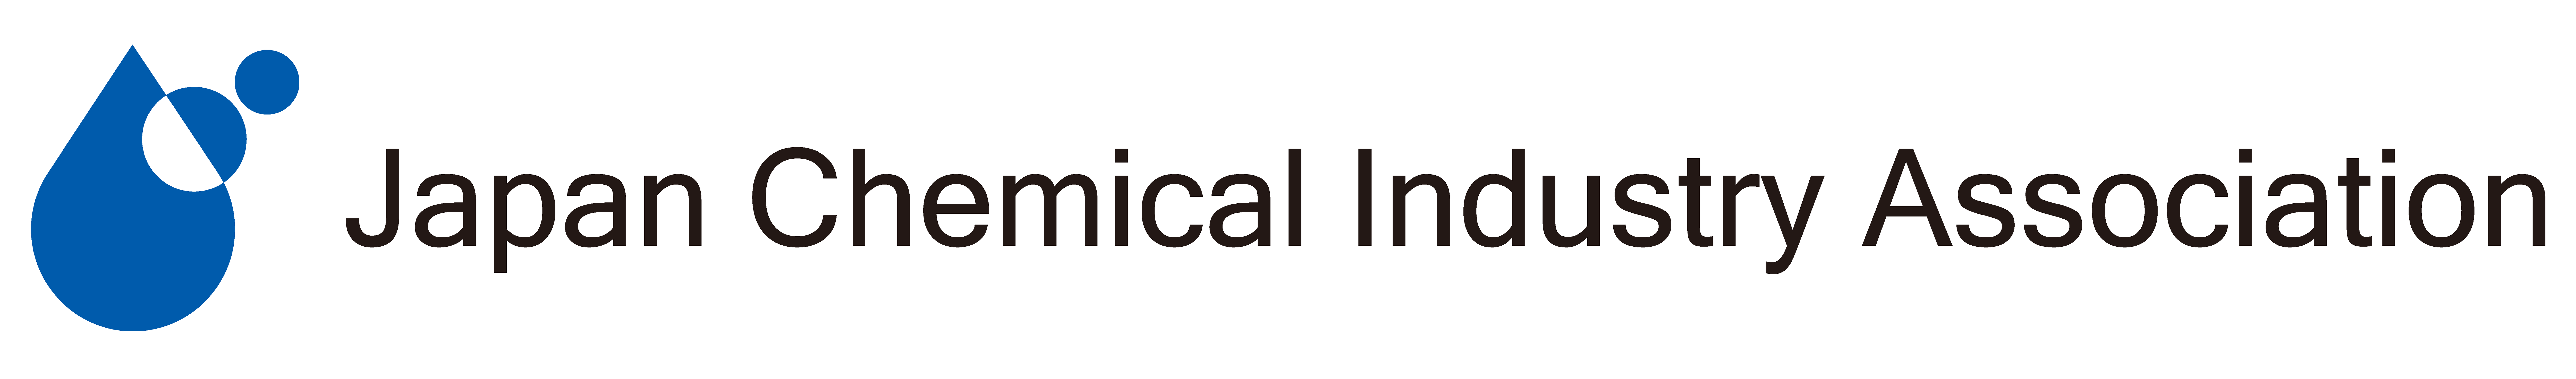 JCIA JCIA Japan Chemical Industry Association